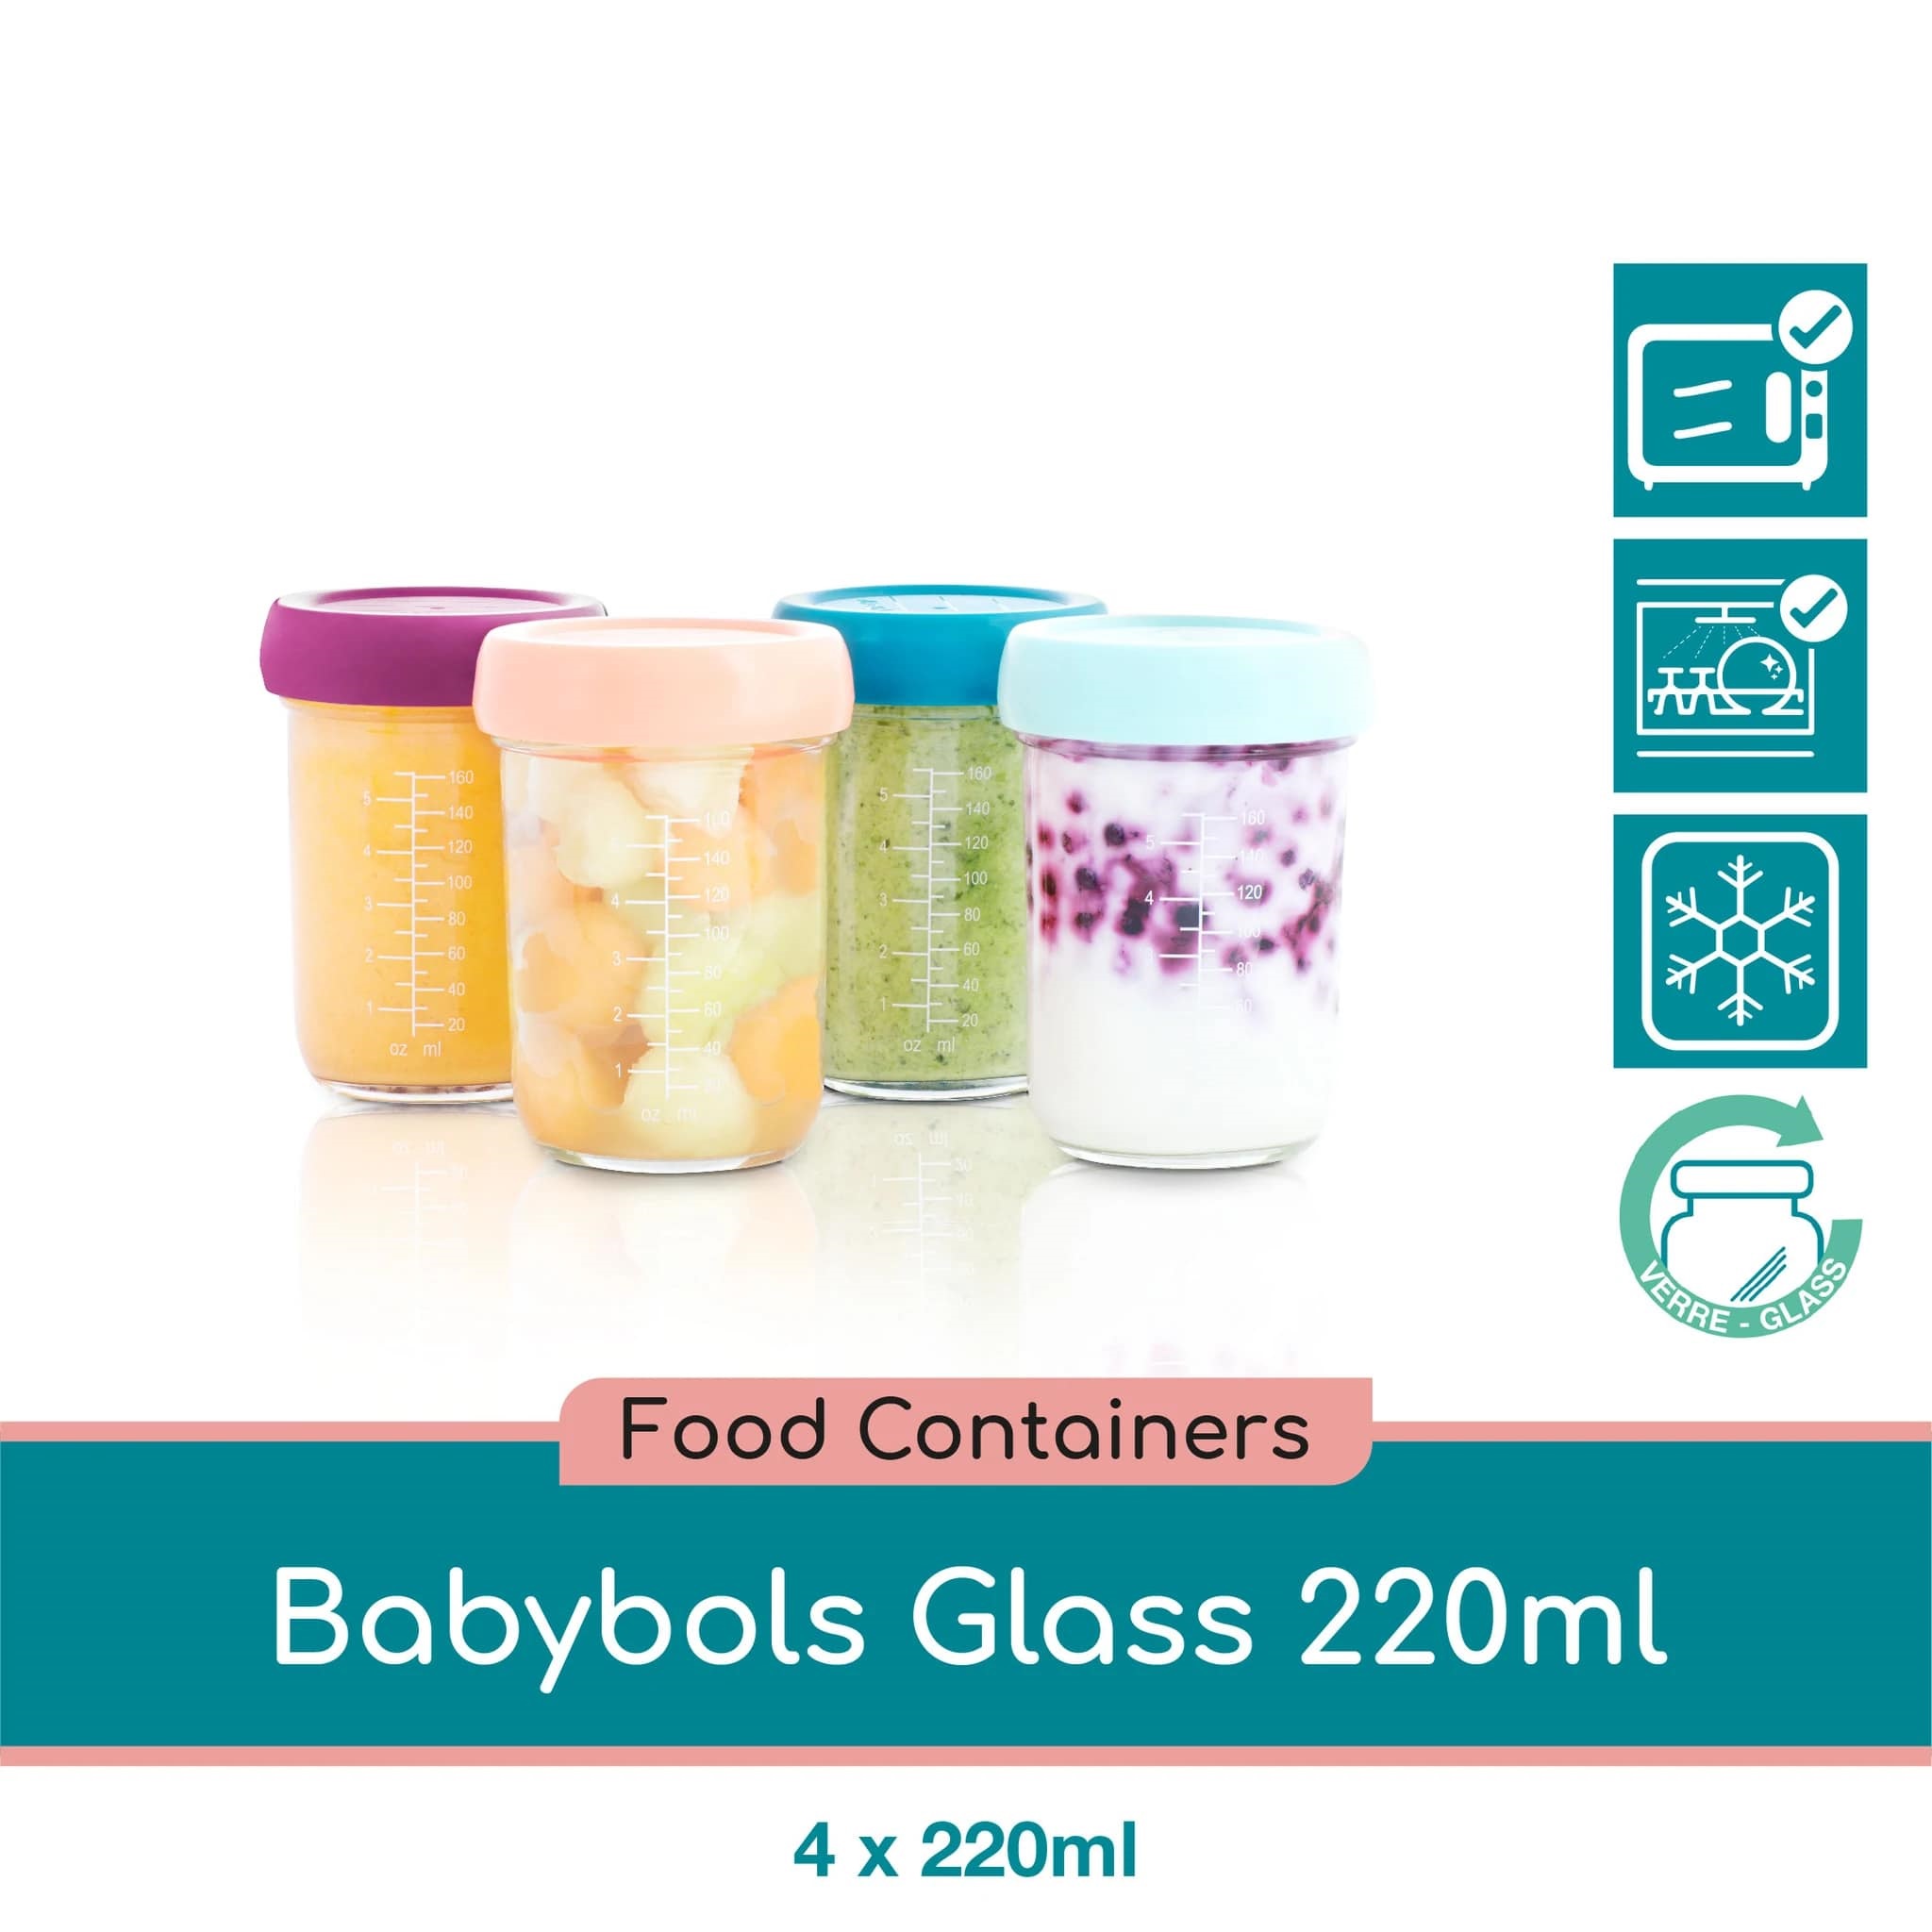 baby-fair Babymoov Glass Babybols - 220ml x4